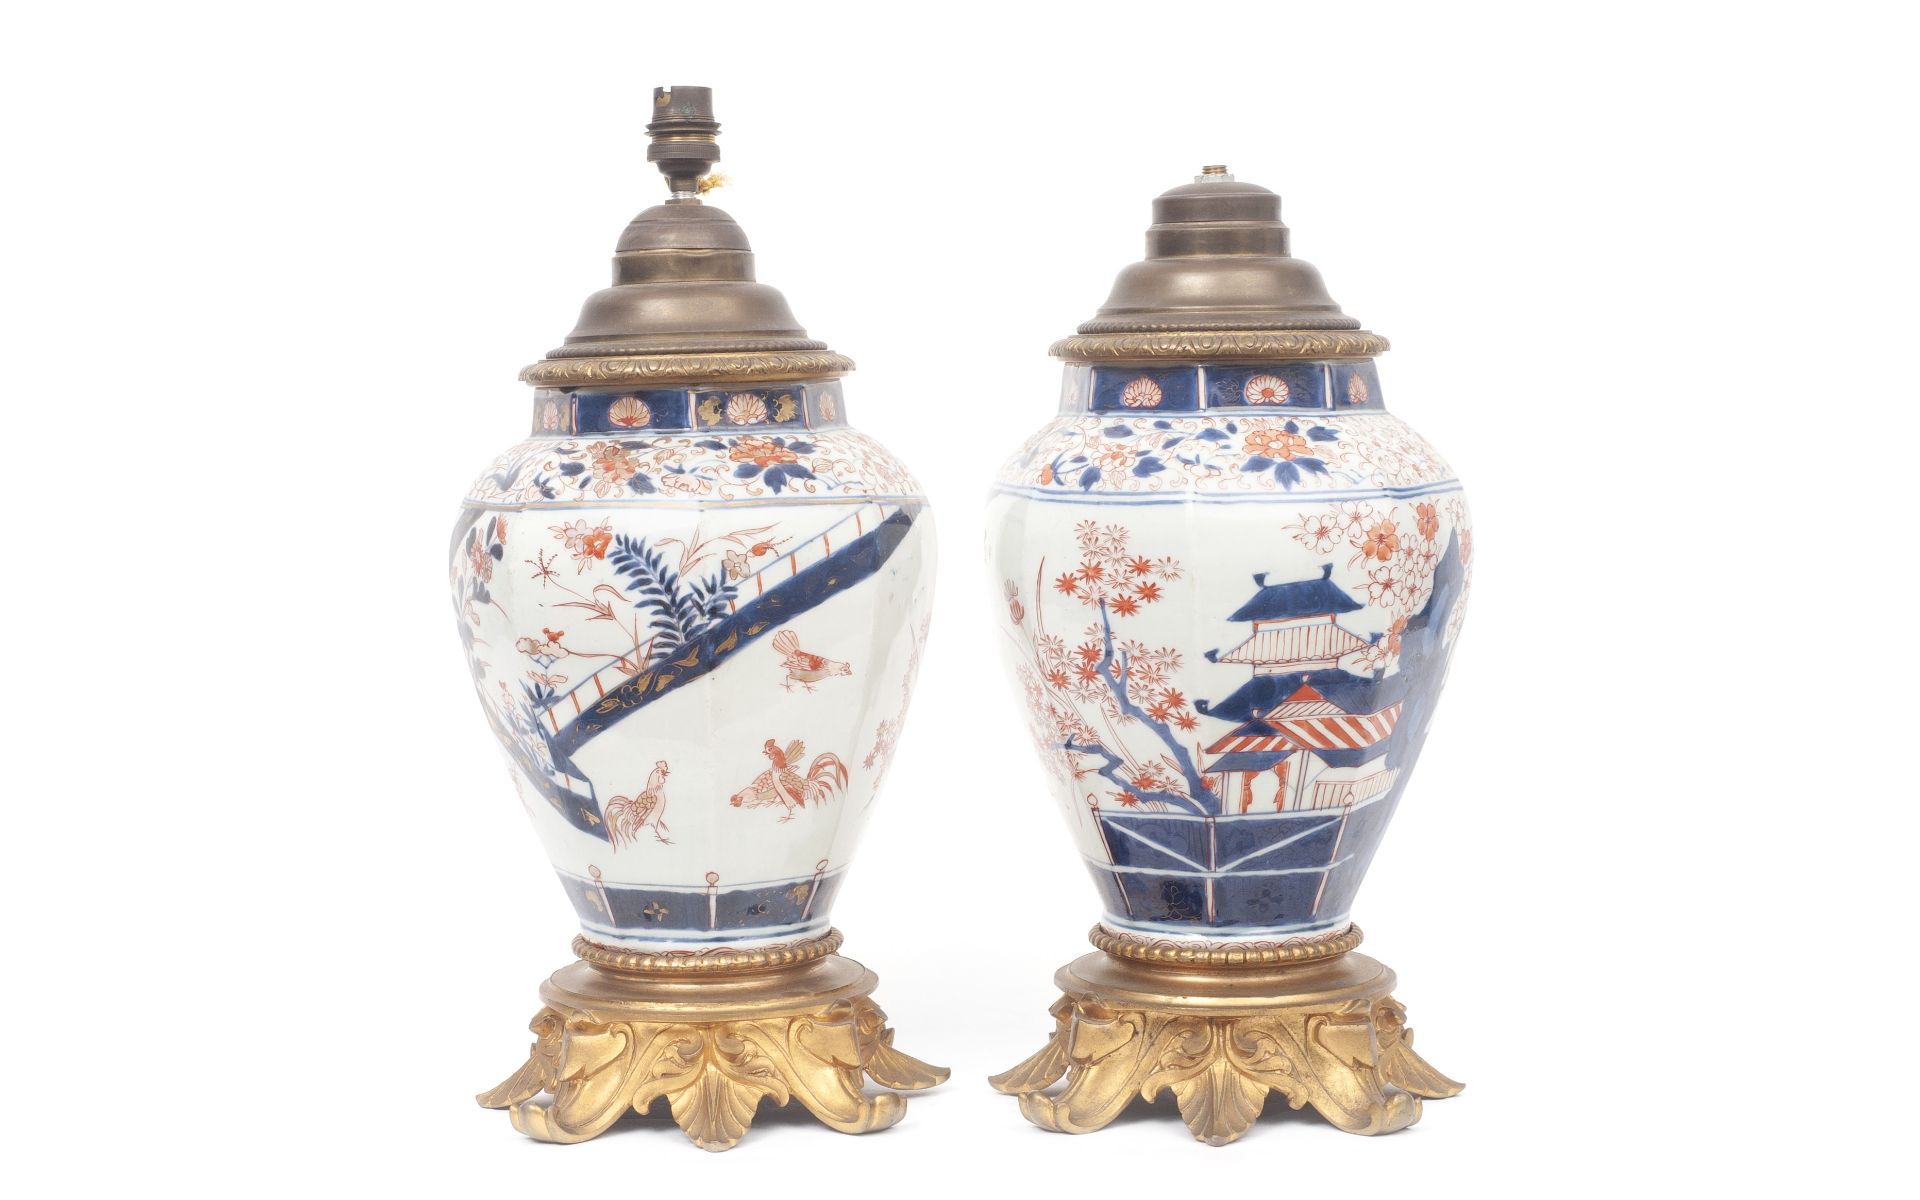 A PAIR OF JAPANESE 17TH CENTURY EDO PERIOD ARITA PORCELAIN AND ORMOLU VASE LAMPS